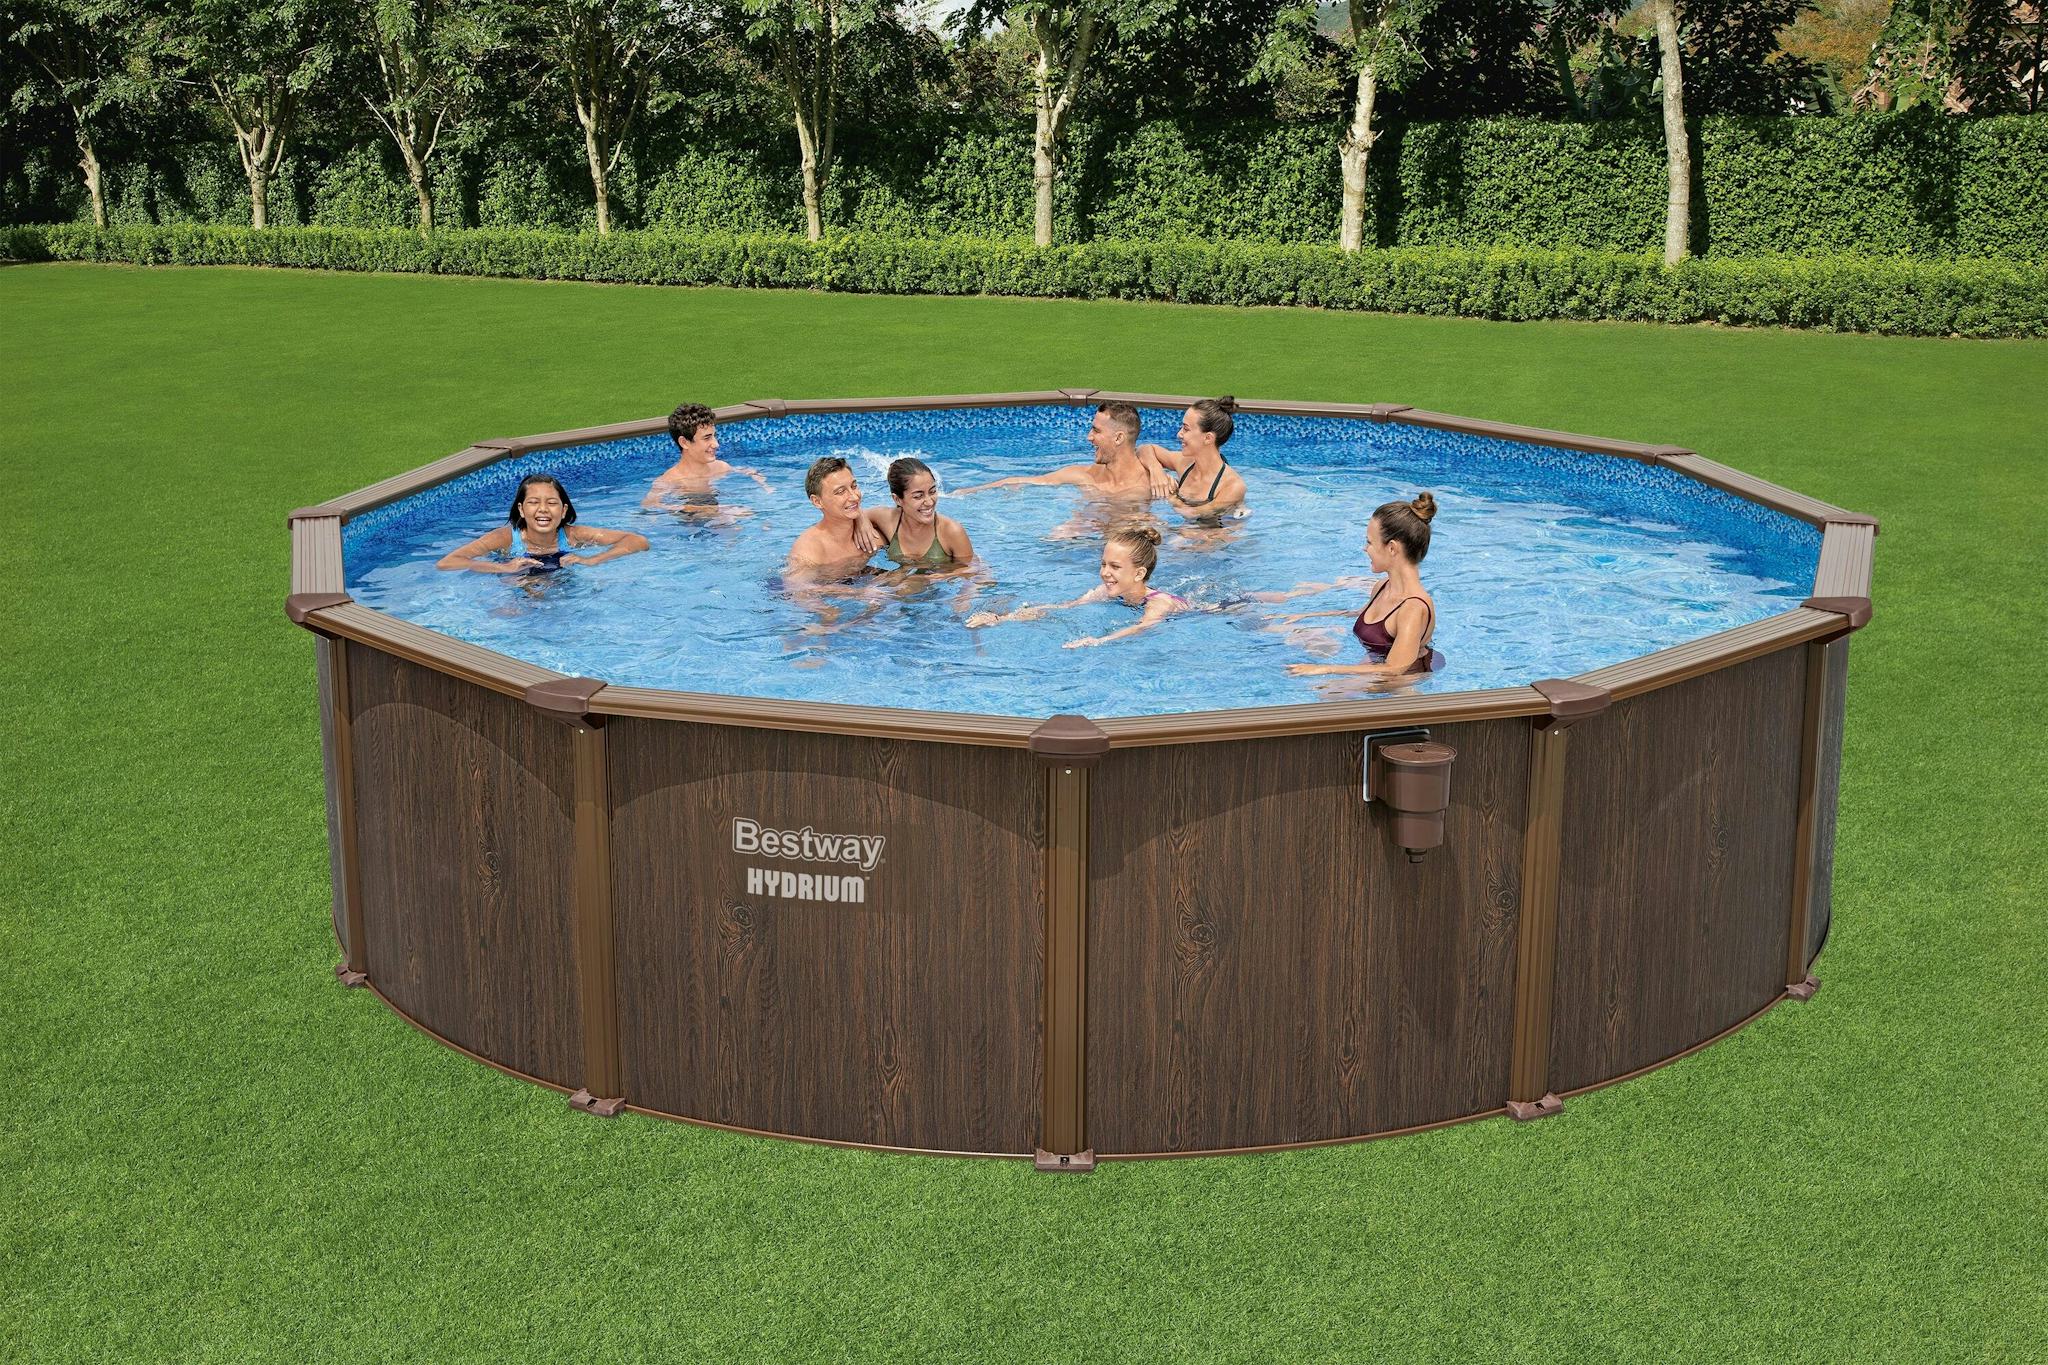 Piscine fuori terra Set piscina fuori terra rotonda Hydrium da 550x130 cm effetto legno Bestway 3